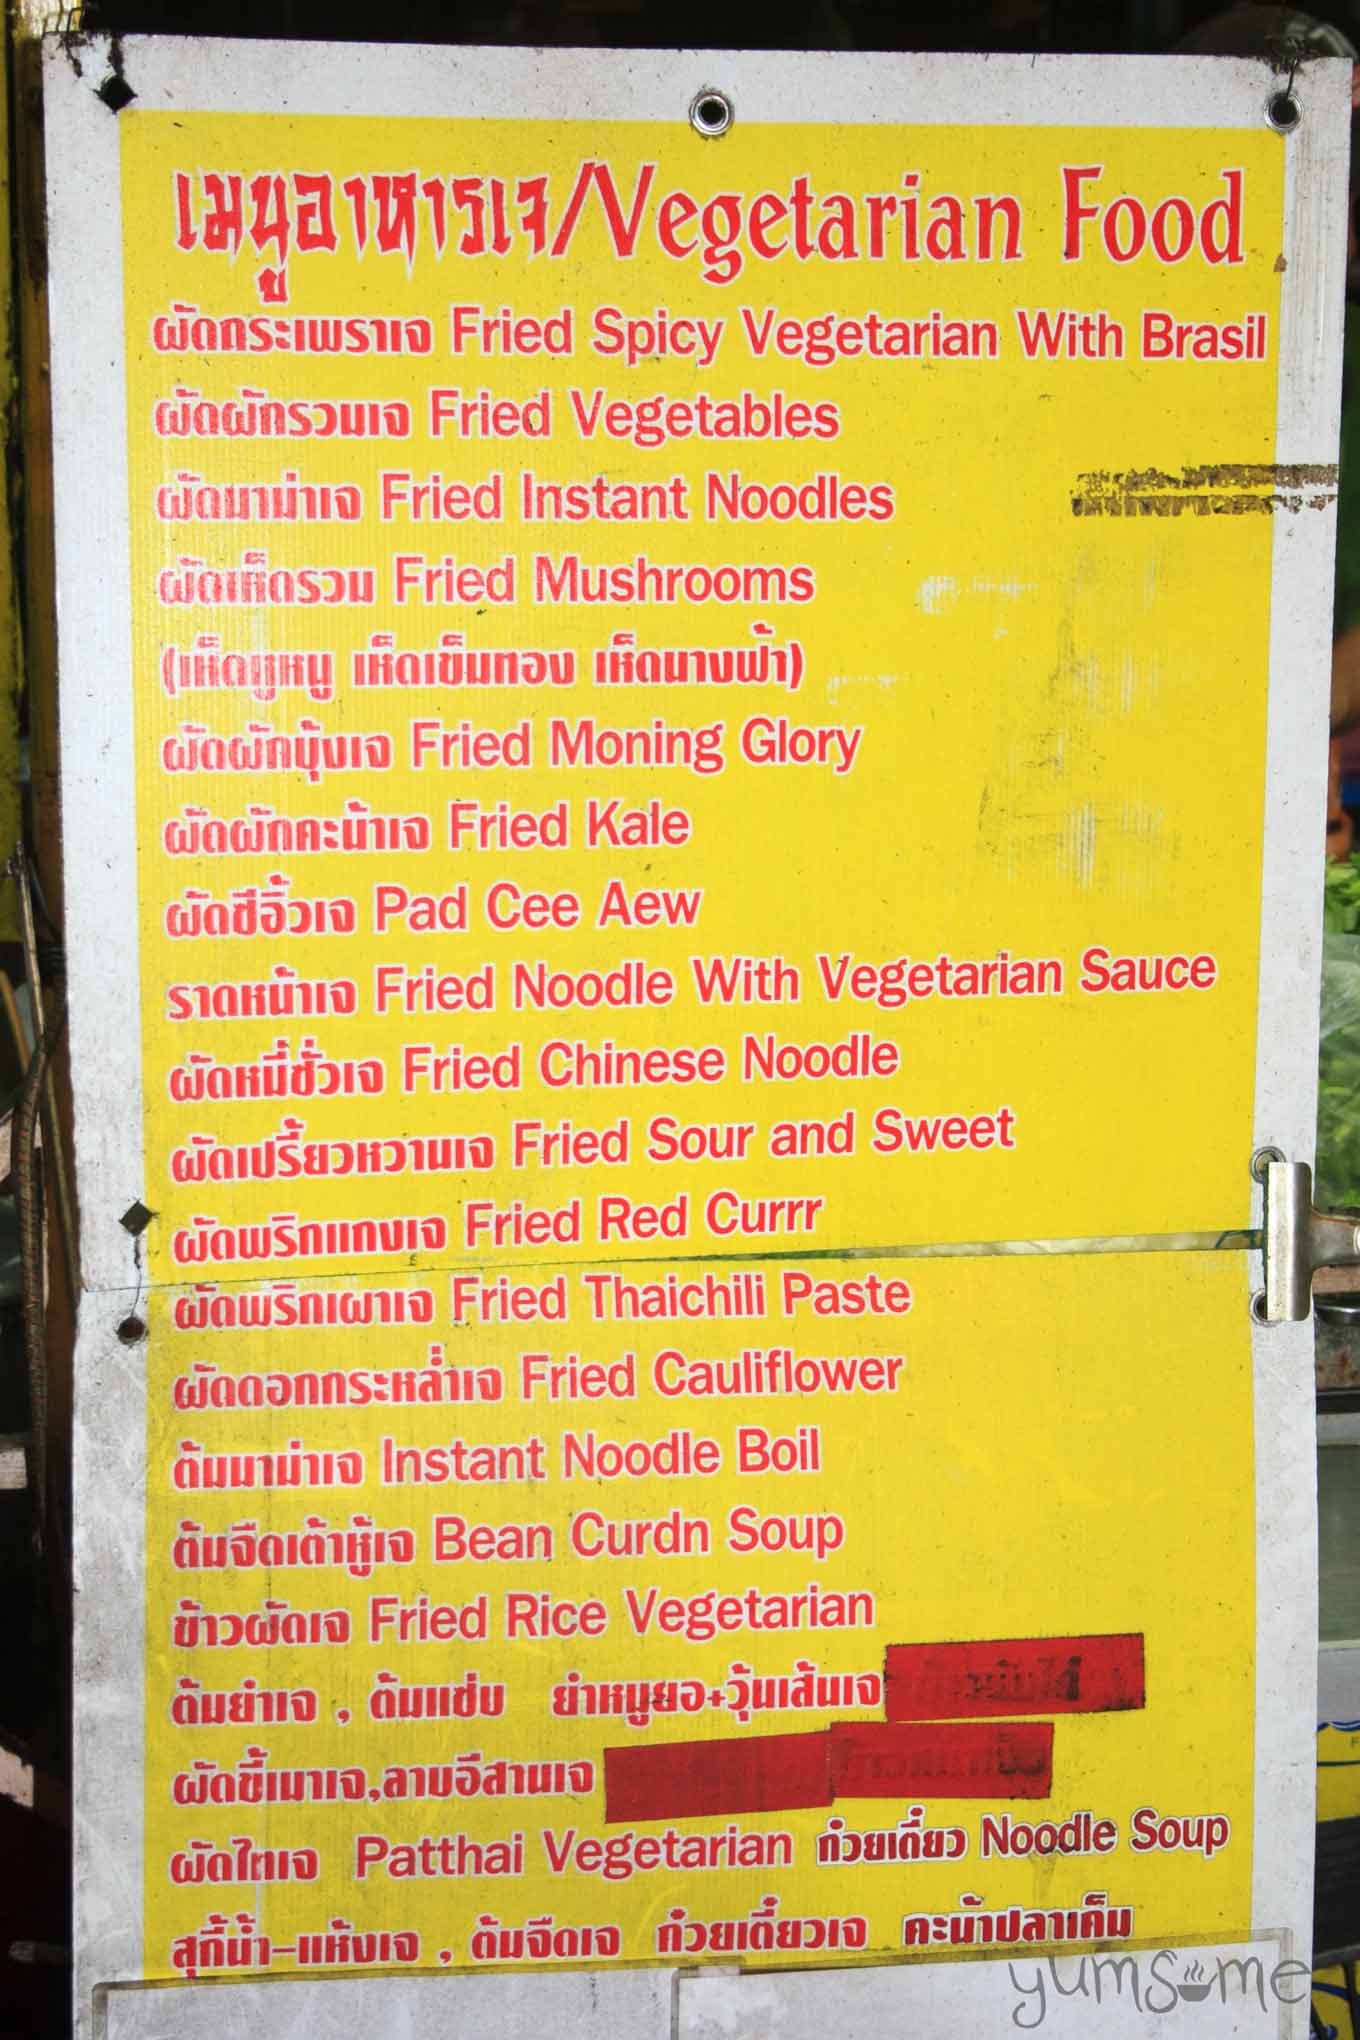 The jay (vegan) menu at Chiang Mai Gate night market.